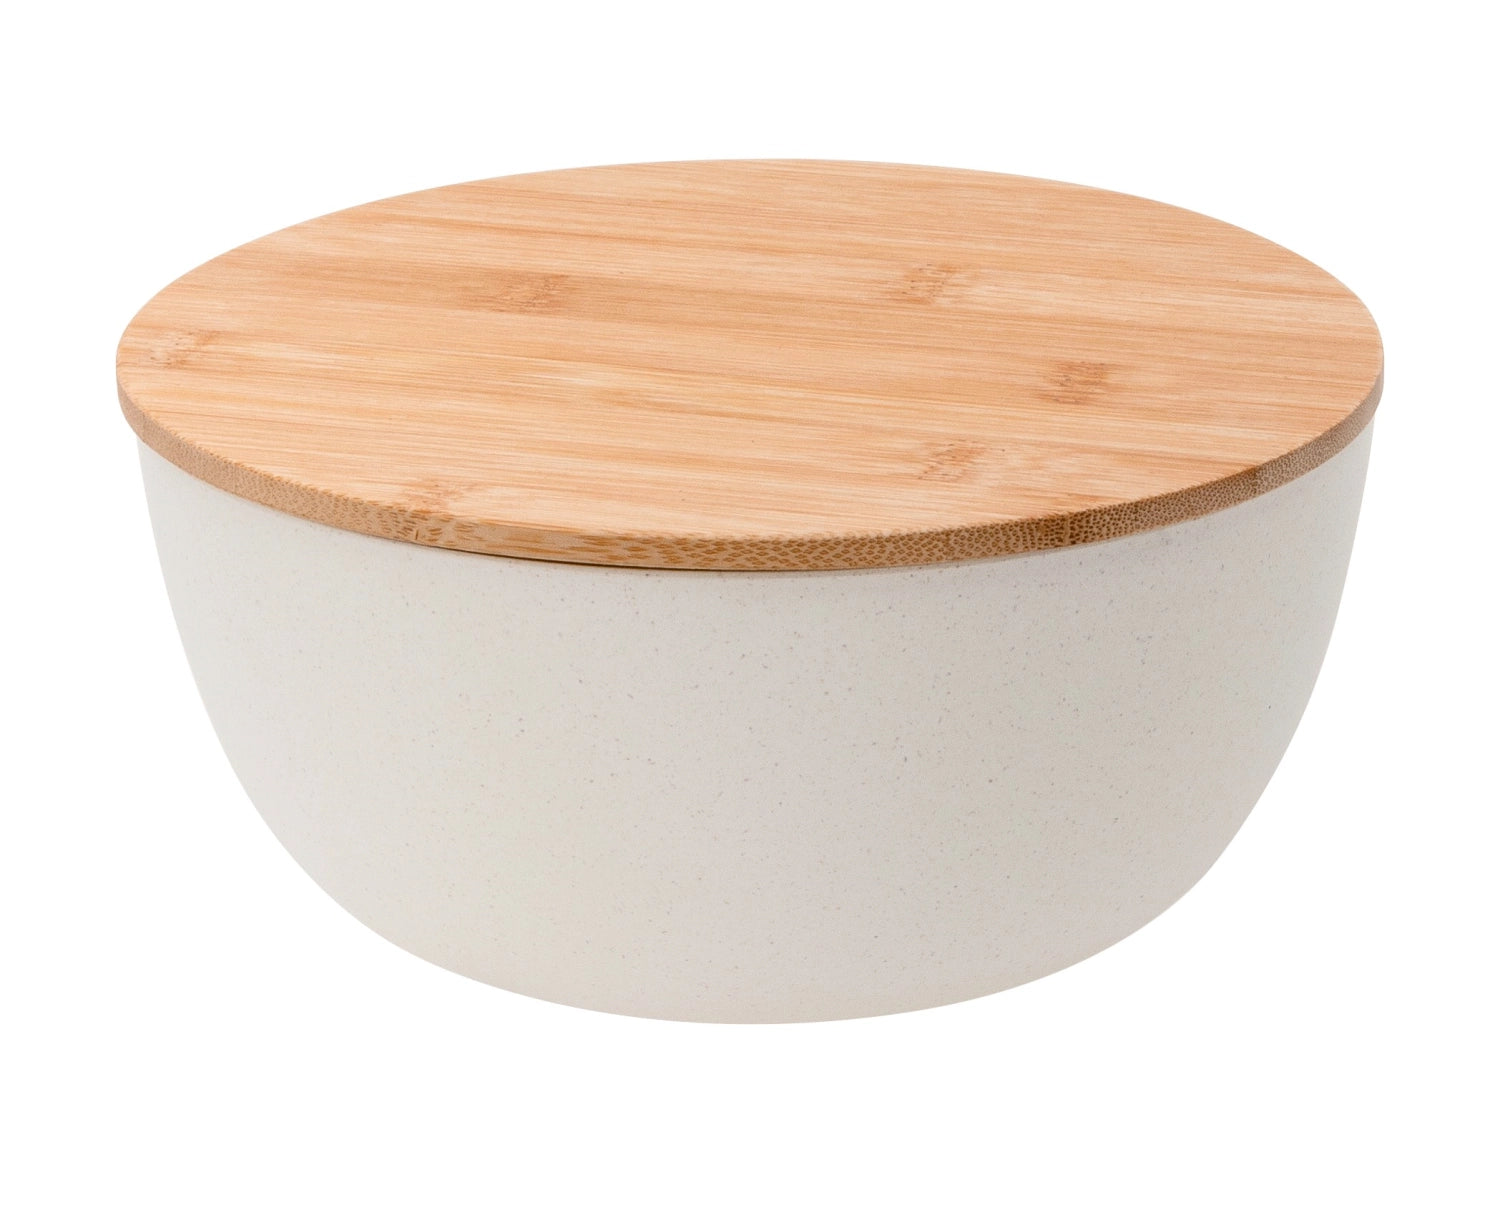 Salatschüssel mit Bambusdeckel, cream, D19cm - KAQTU Design